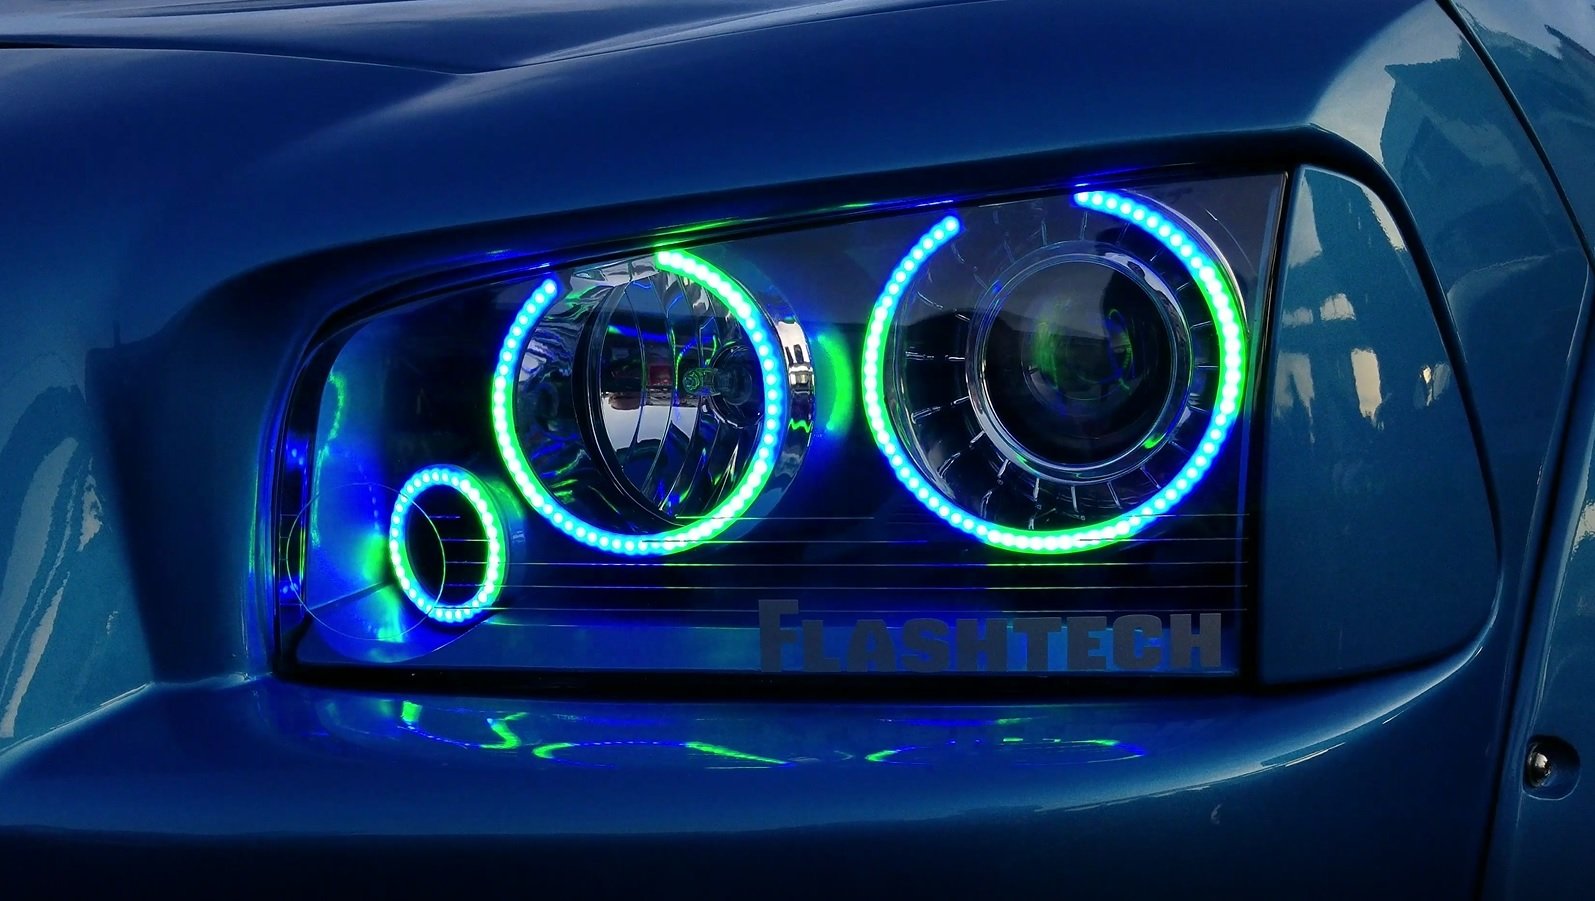 Hyundai-Tiburon-2003, 2004-LED-Halo-Headlights-ColorChase-No Remote-HY-TB0304-CCH